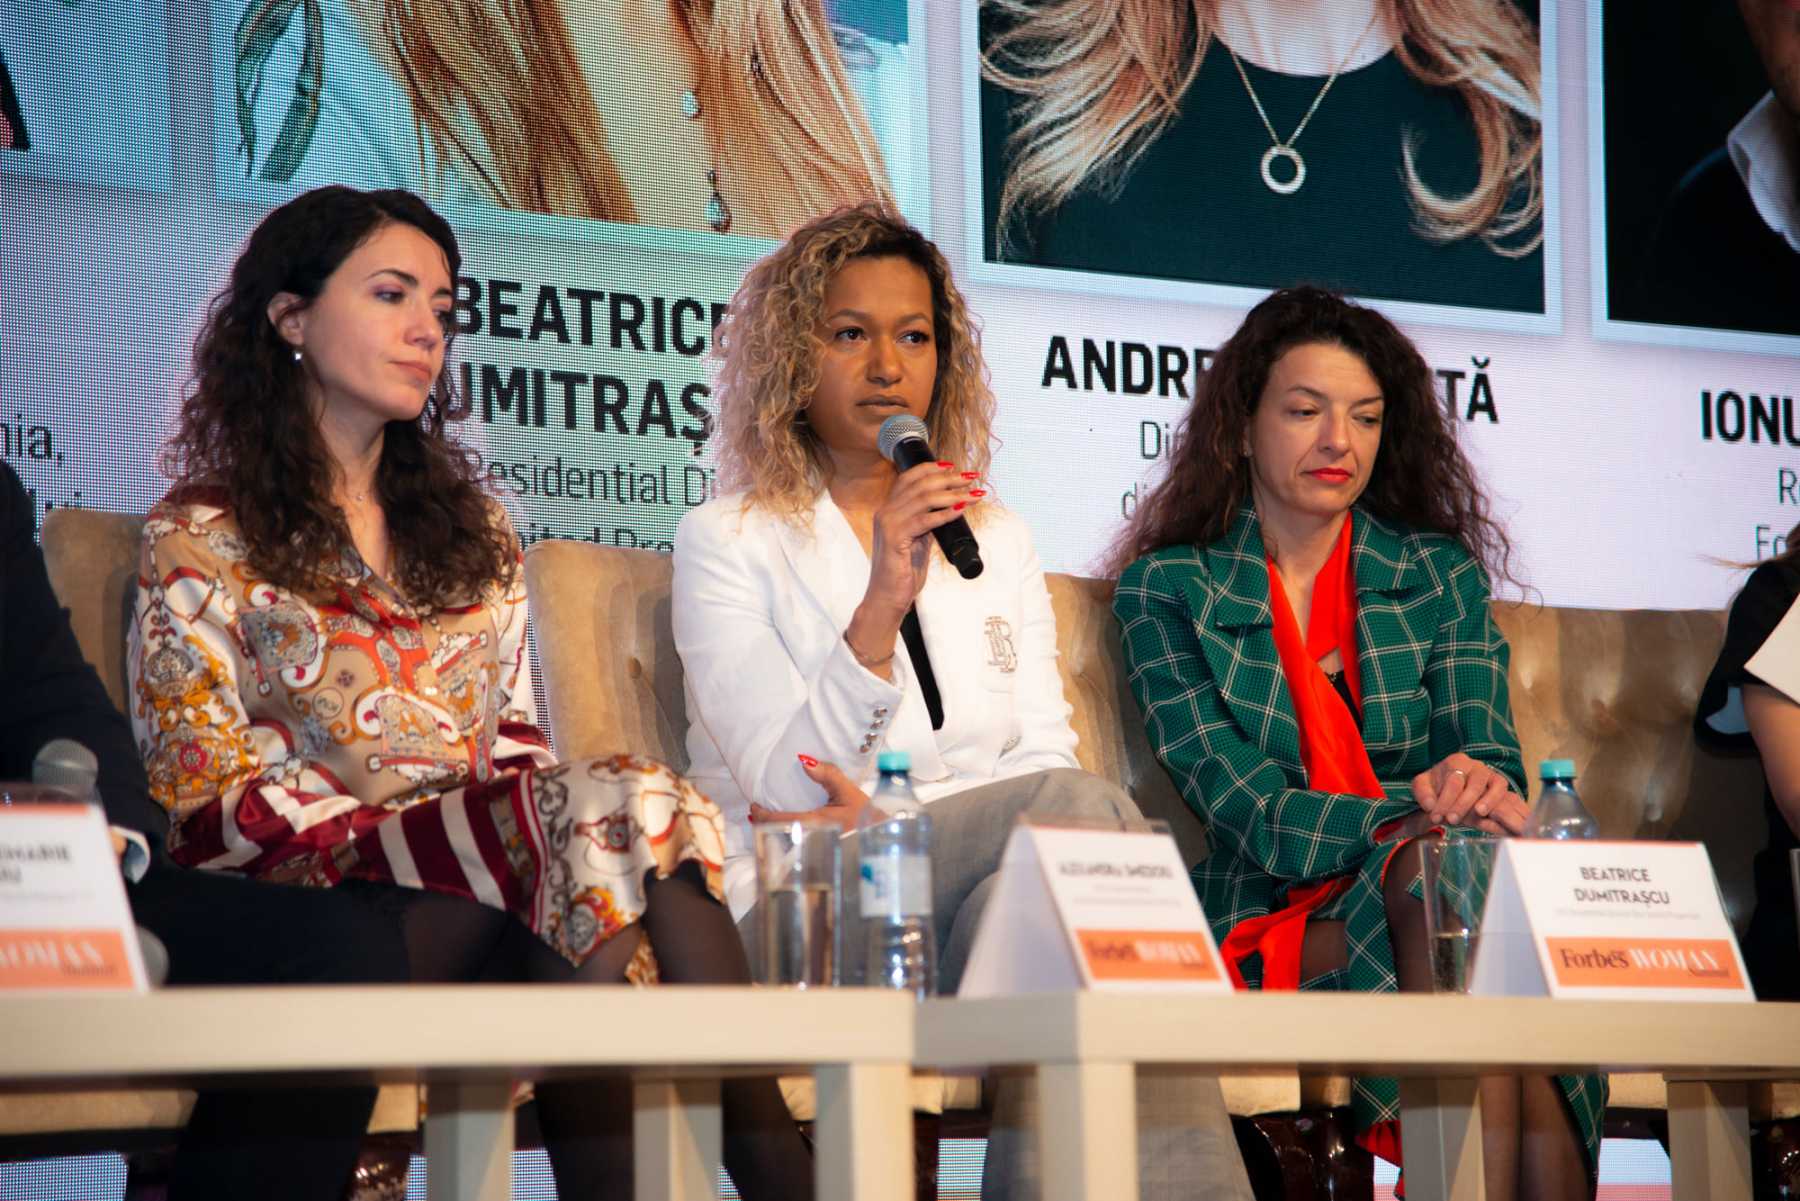 Beatrice Dumitrașcu, CEO Residential Division, speaker în cadrul Forbes Woman Summit 2022